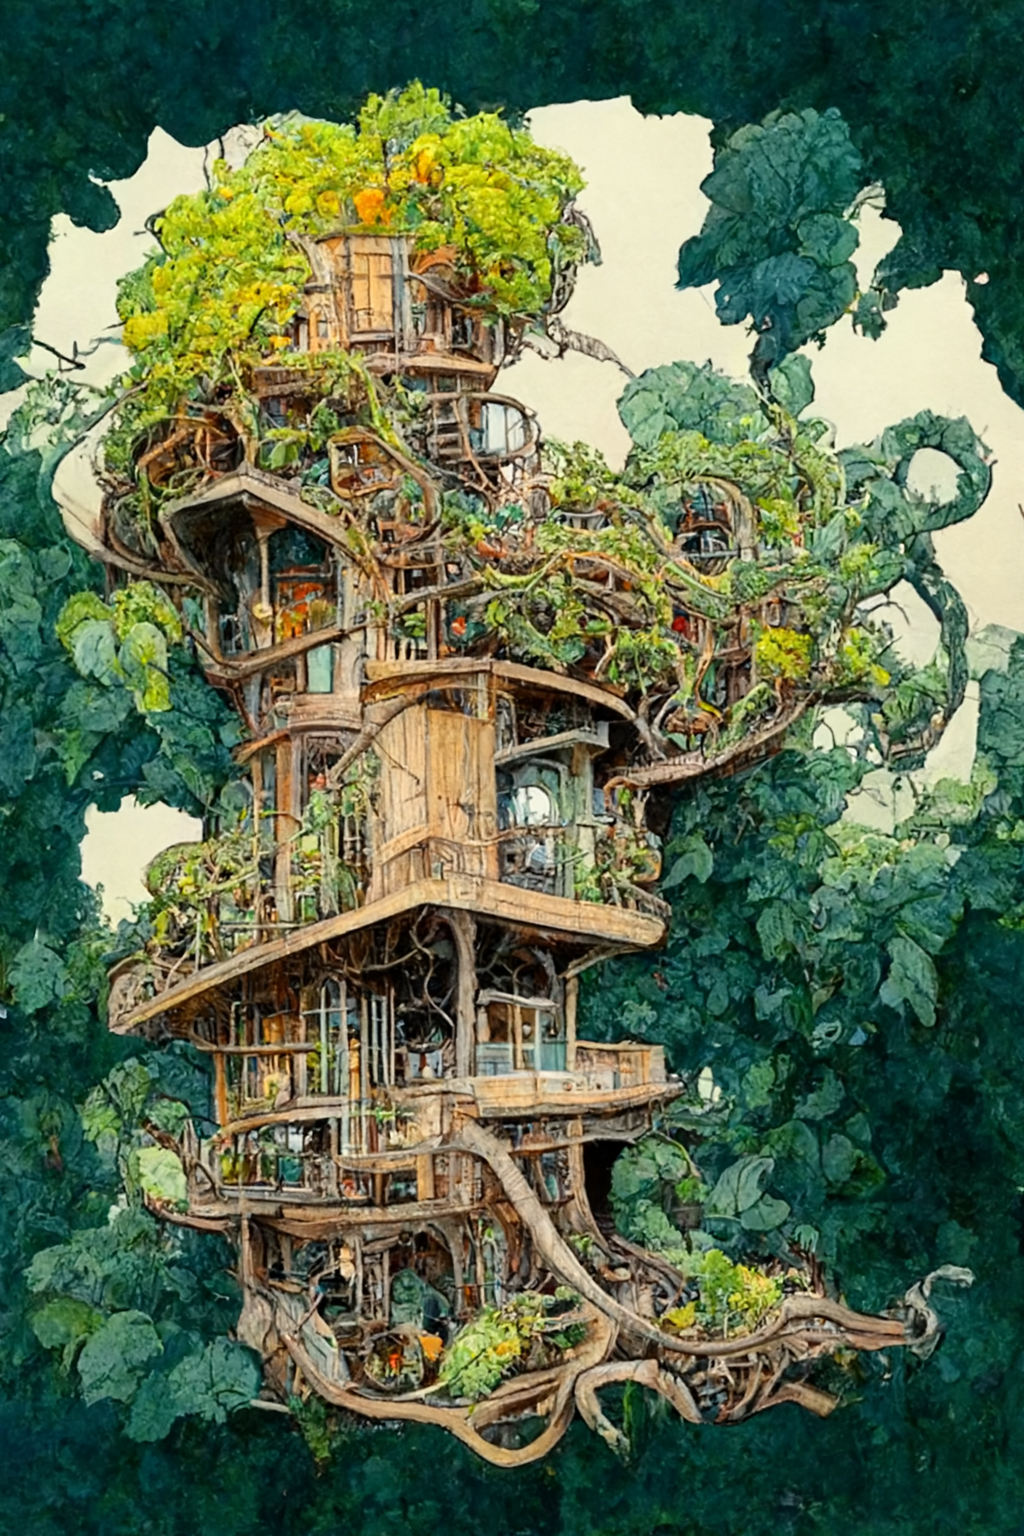 Fantasy Treehouse Art & Architecture